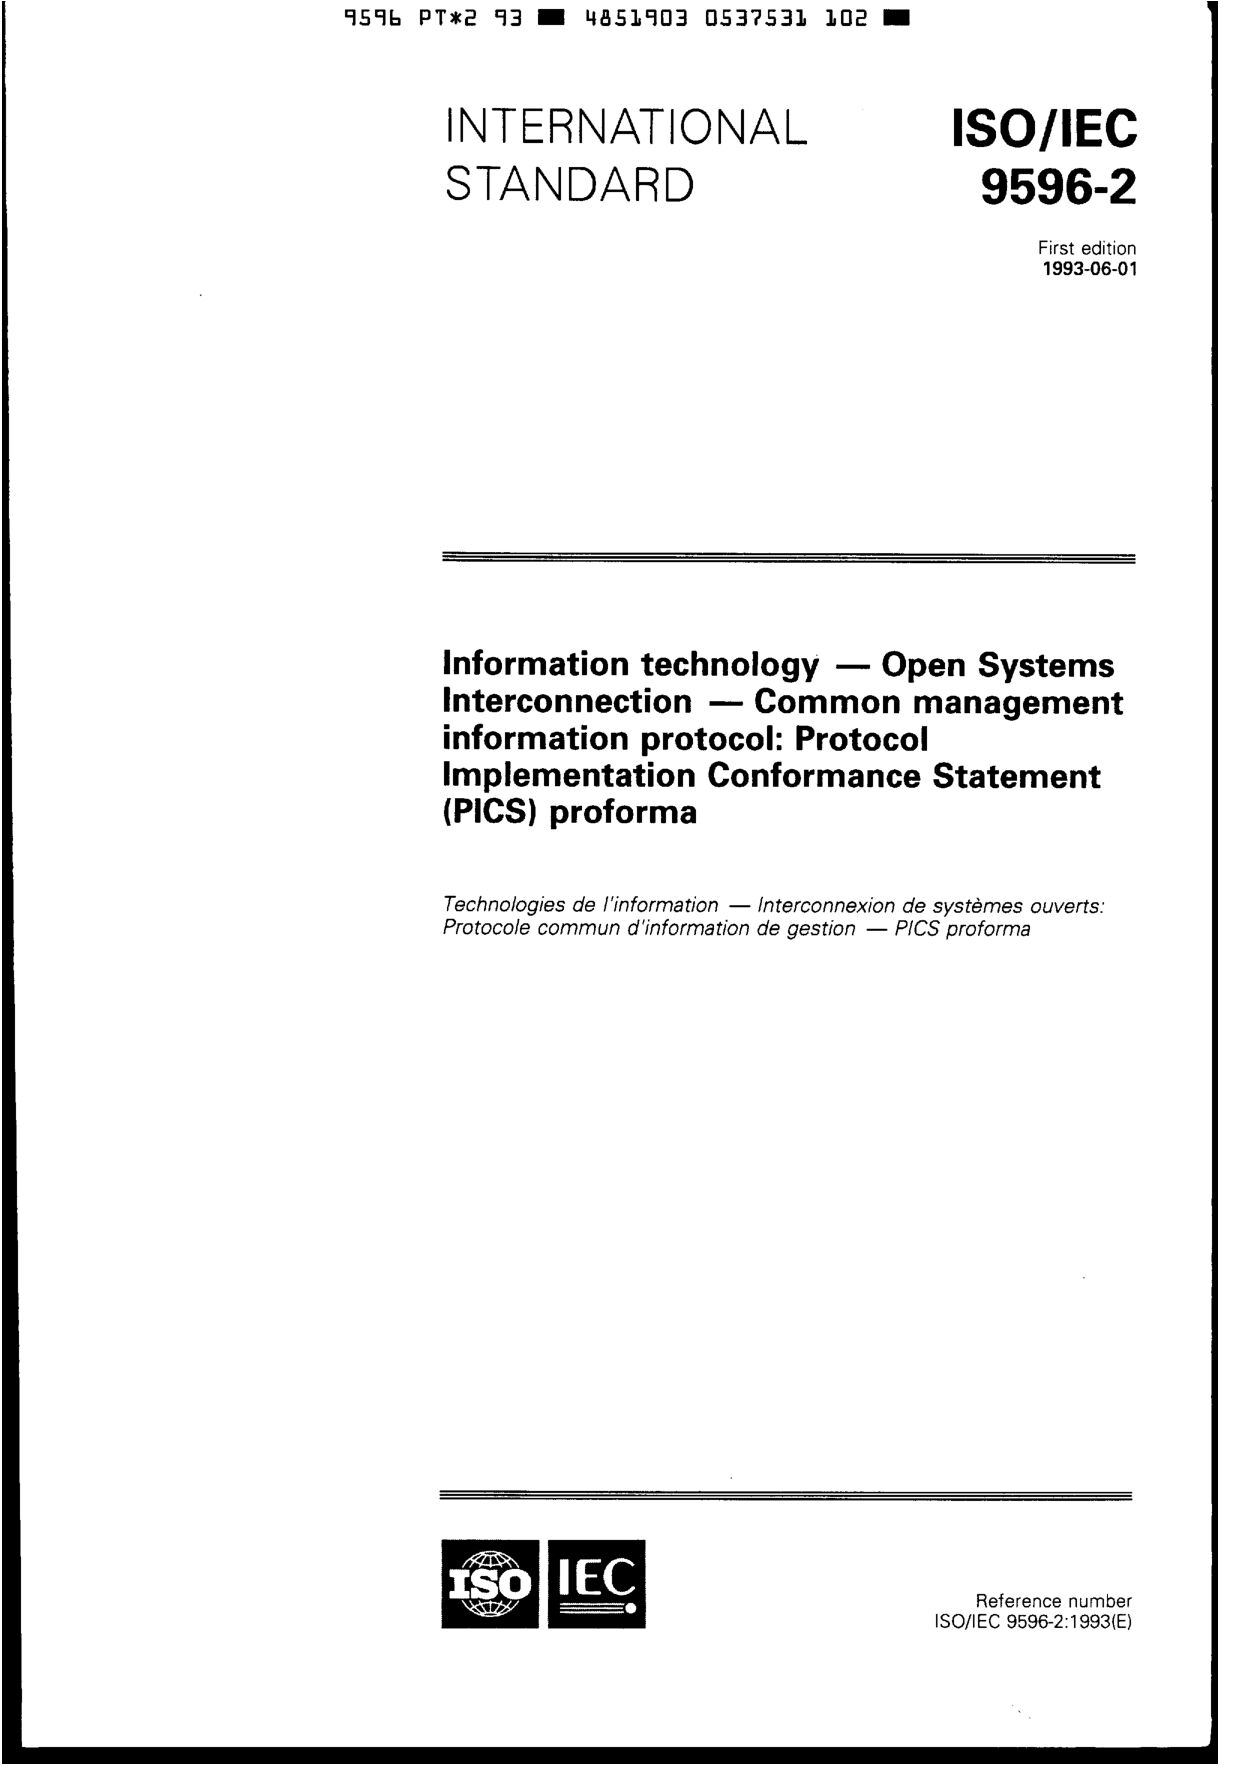 ISO/IEC 9596-2:1993